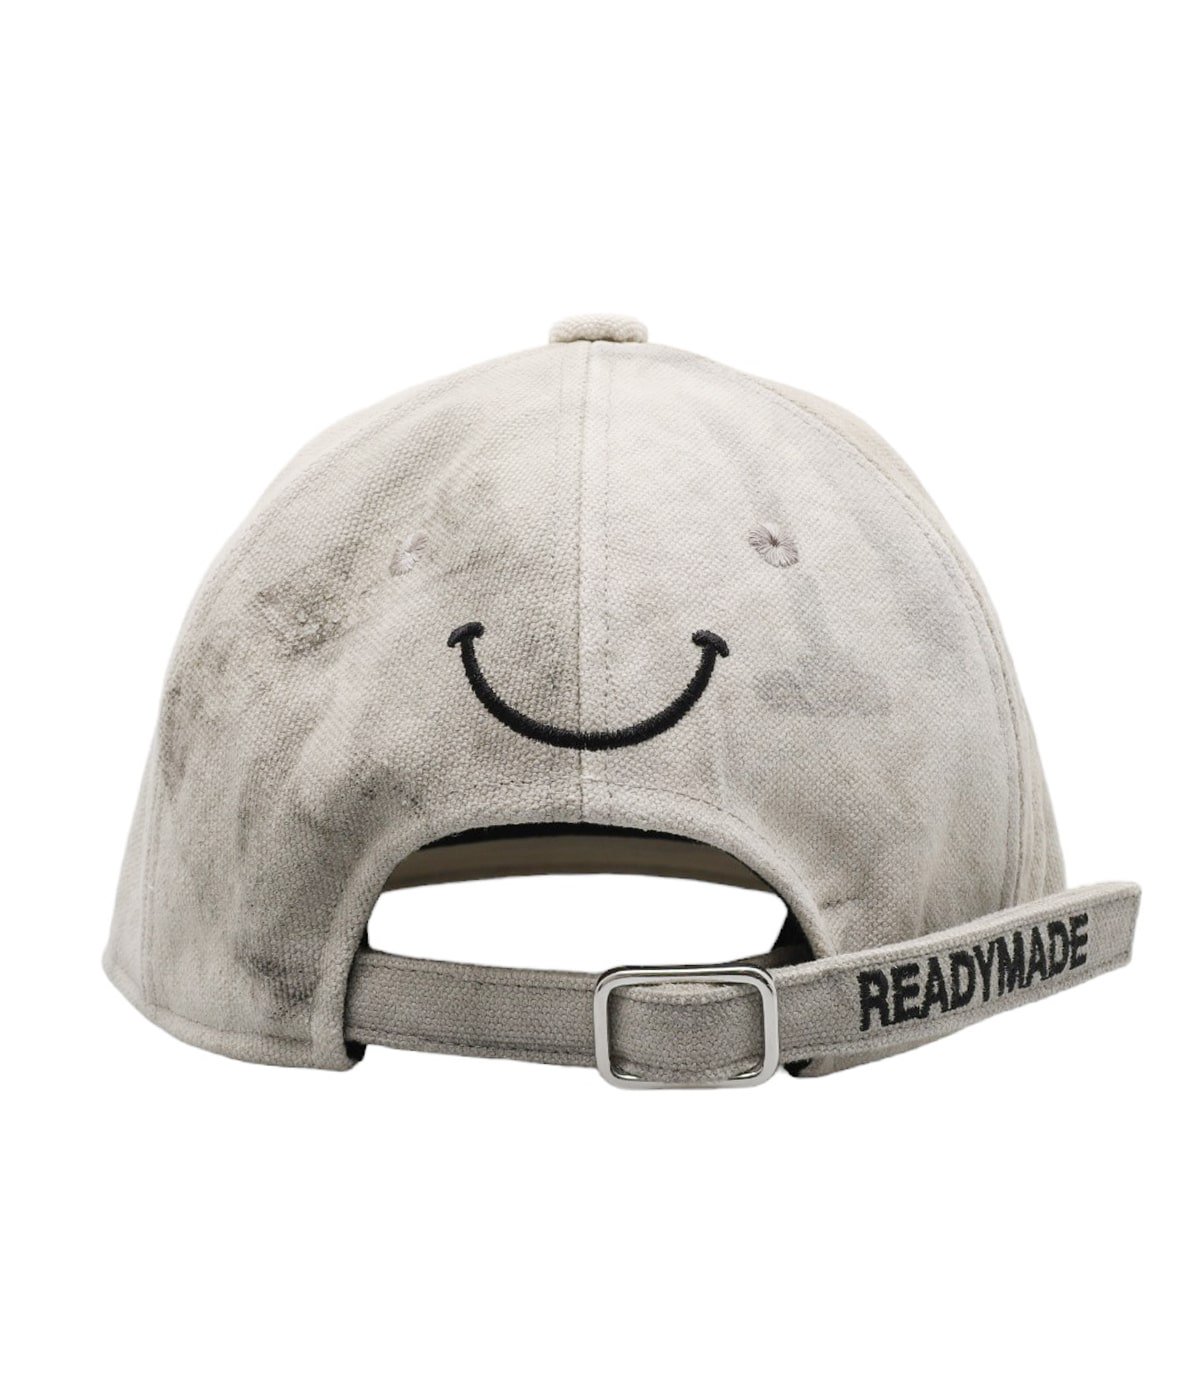 readymade cap